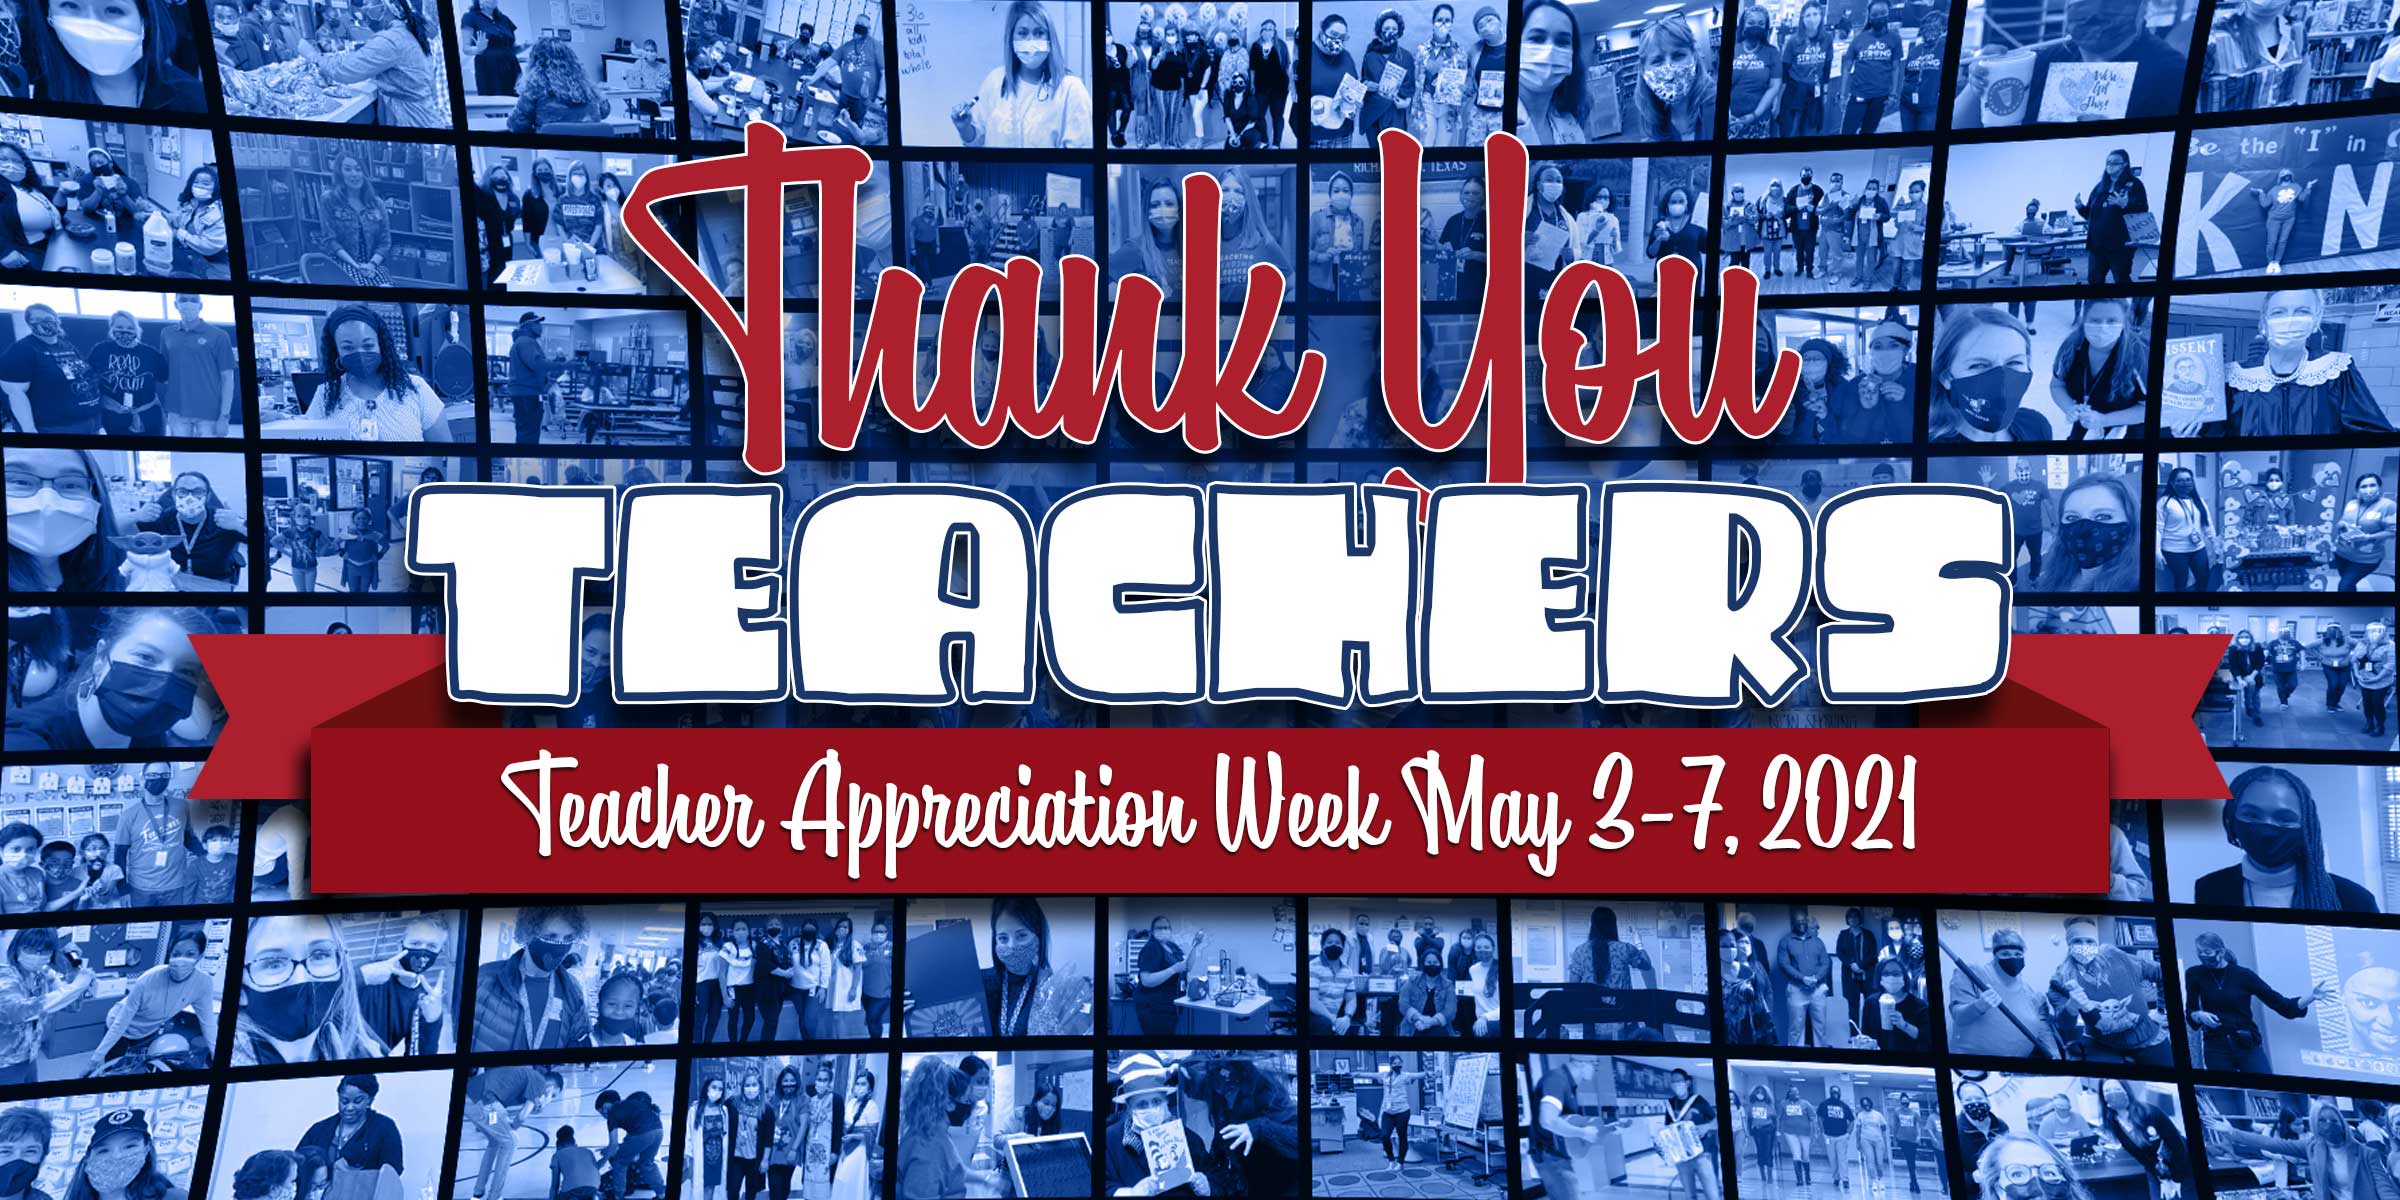 Thank you teacher appreciation week May 3-7, 2021